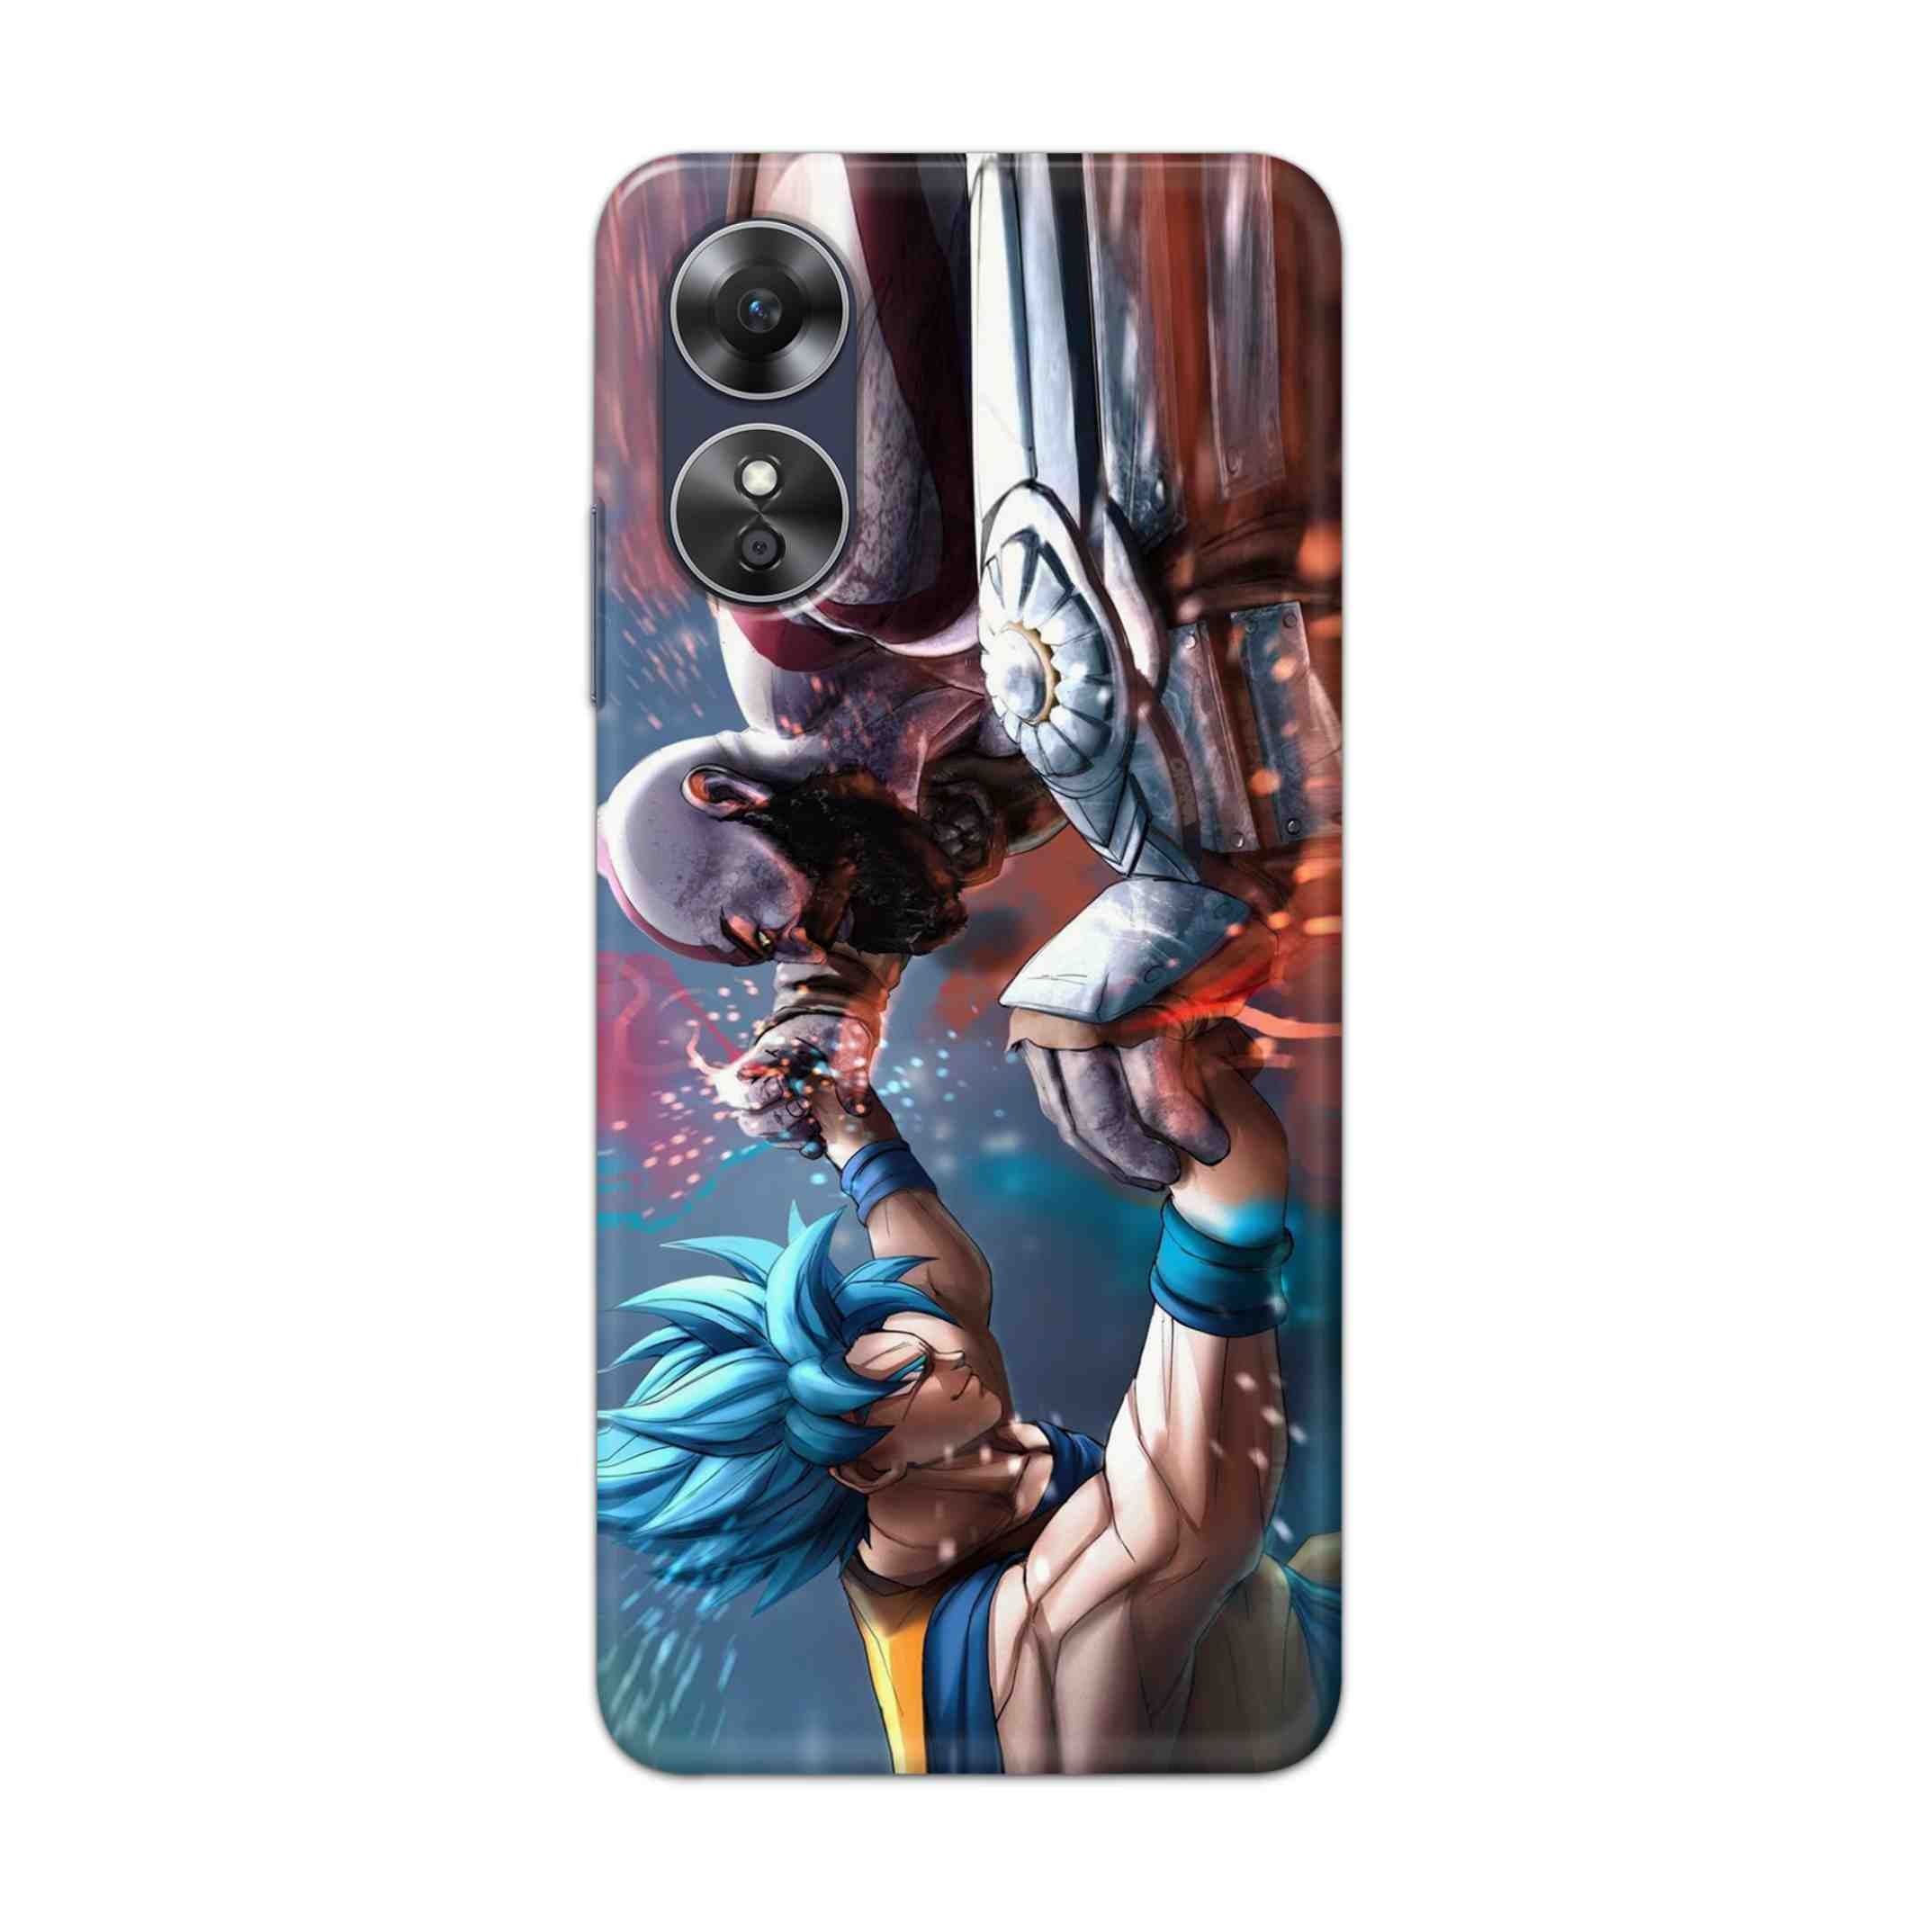 Buy Goku Vs Kratos Hard Back Mobile Phone Case Cover For Oppo A17 Online